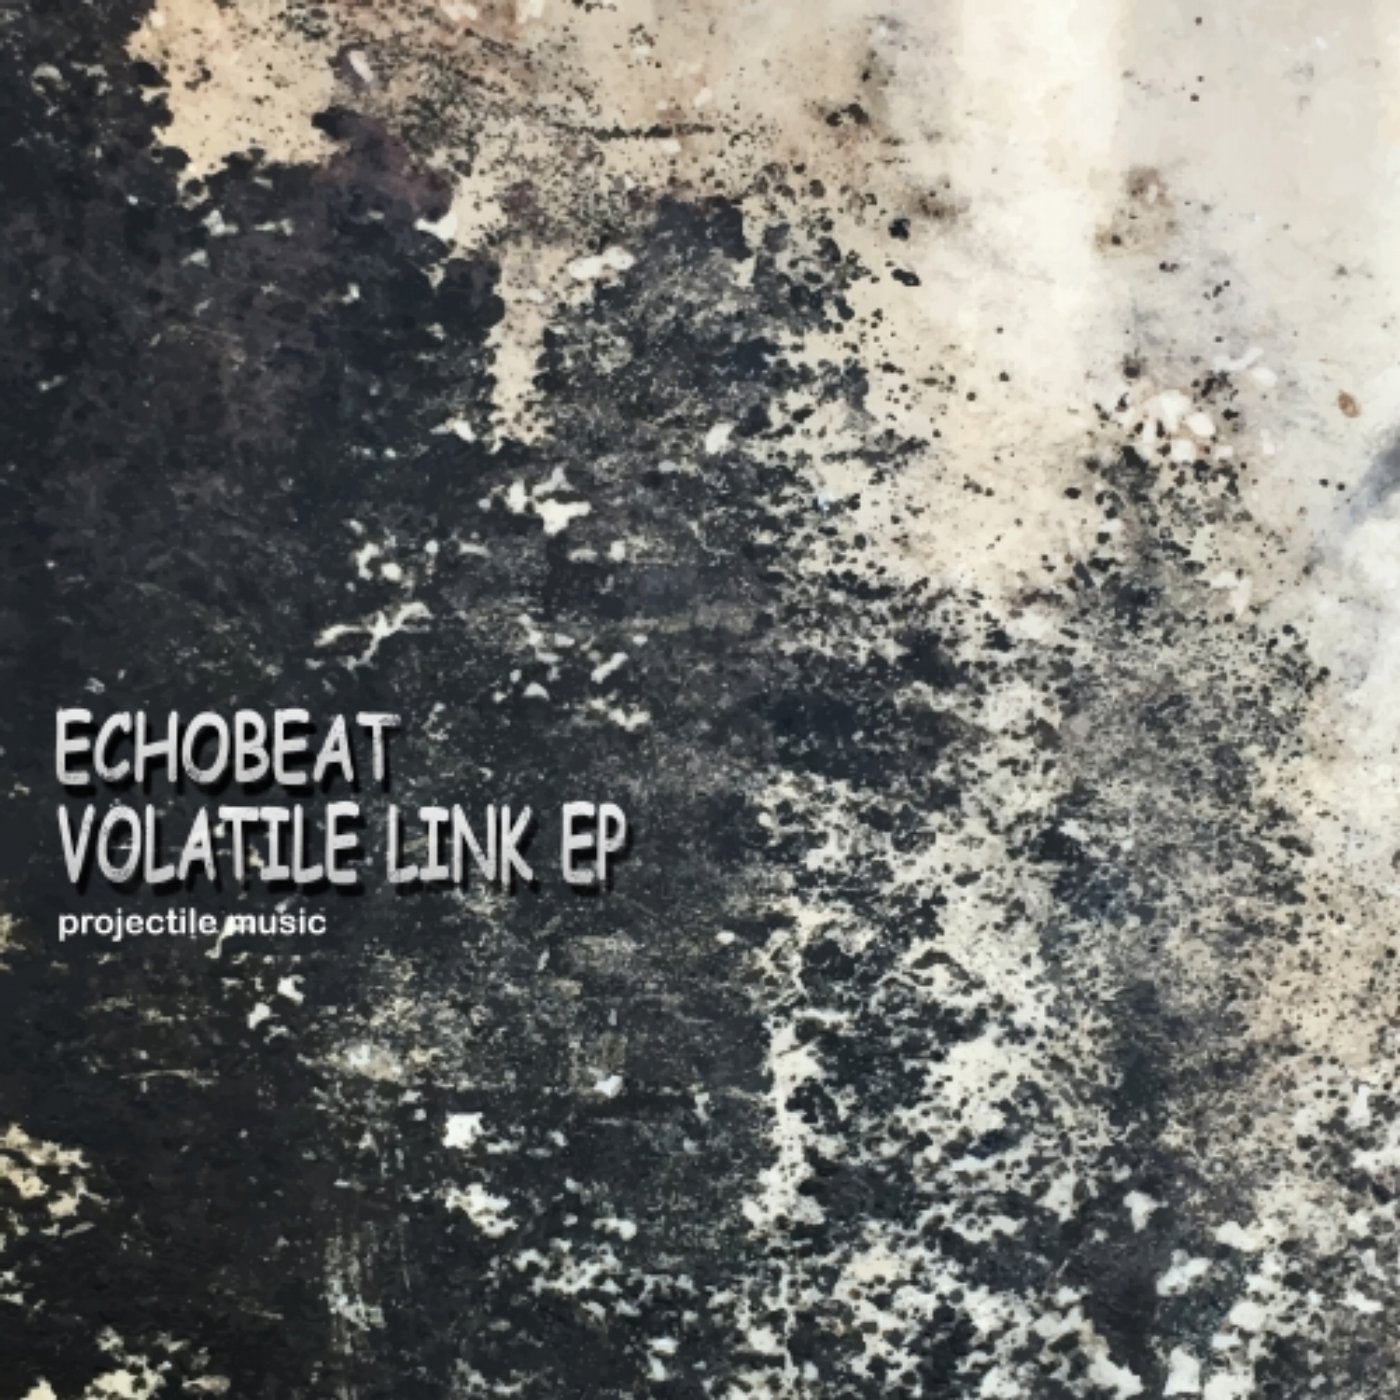 Volatile Link EP